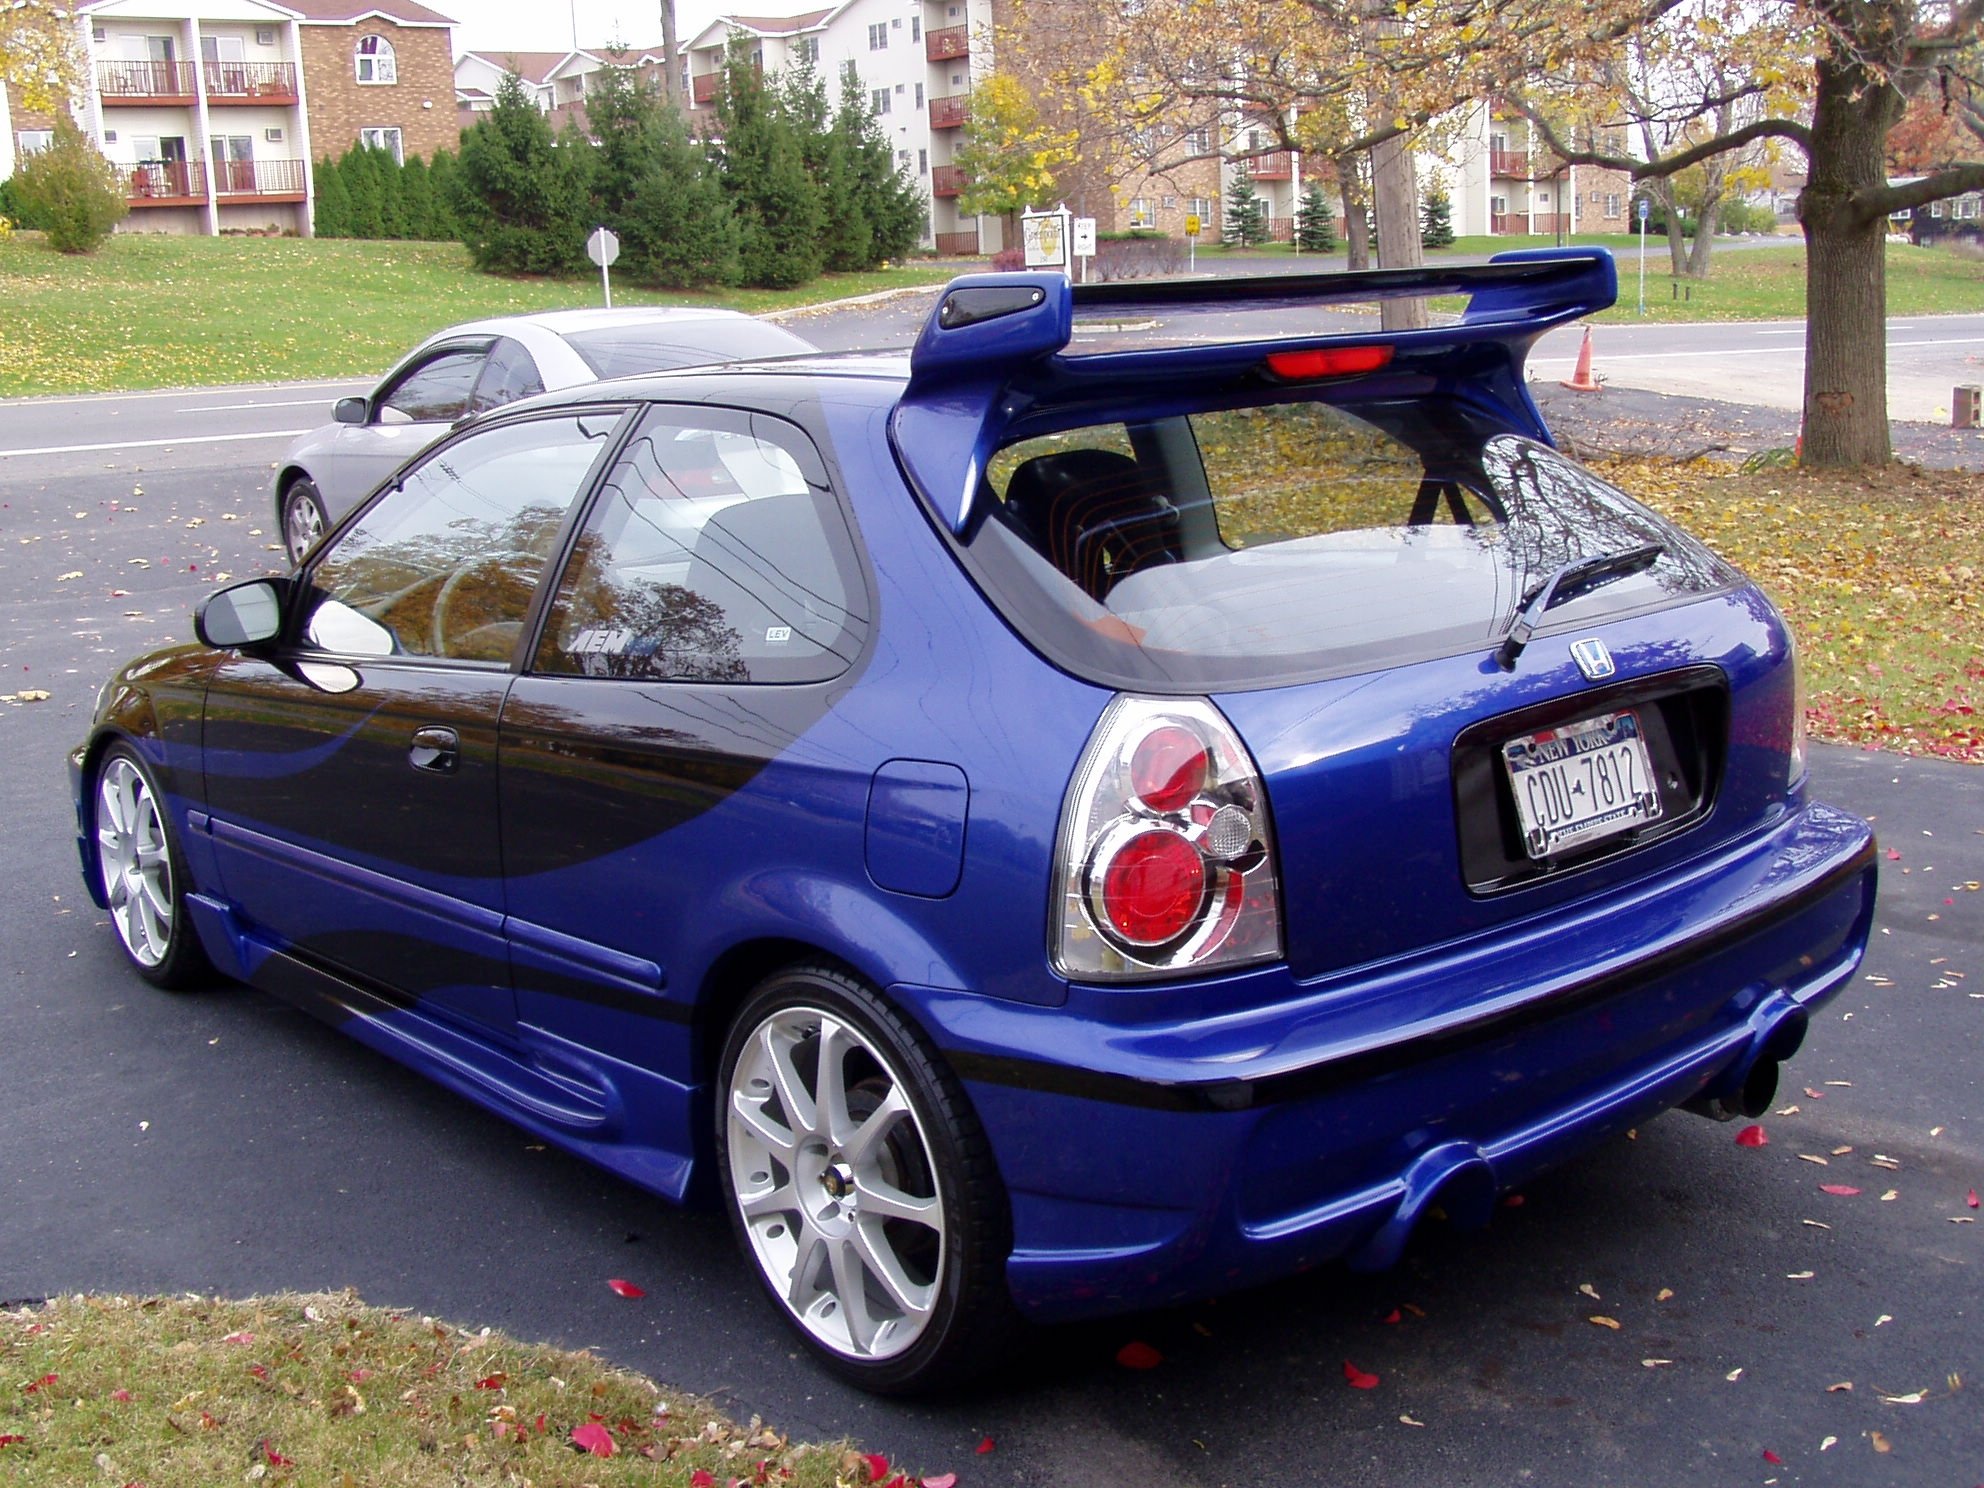 Honda civic 1999. Хонда Цивик 1999. Honda Civic Hatchback 1999. Цивик 1999 хэтчбек.